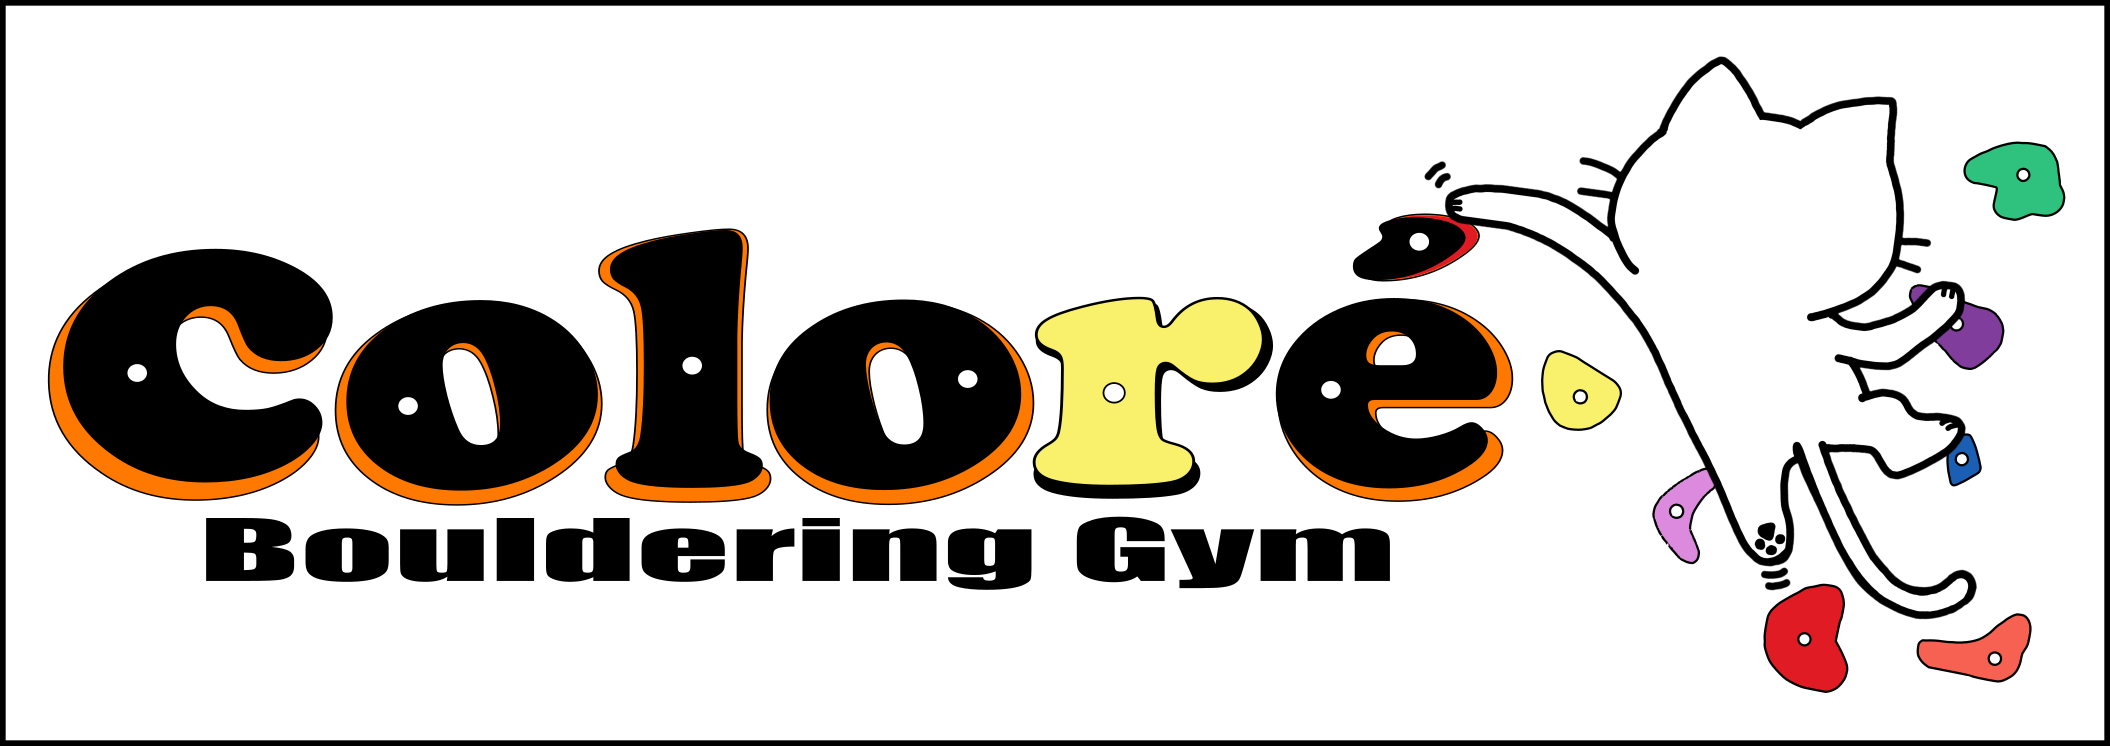 Colore Bouldering gym logo